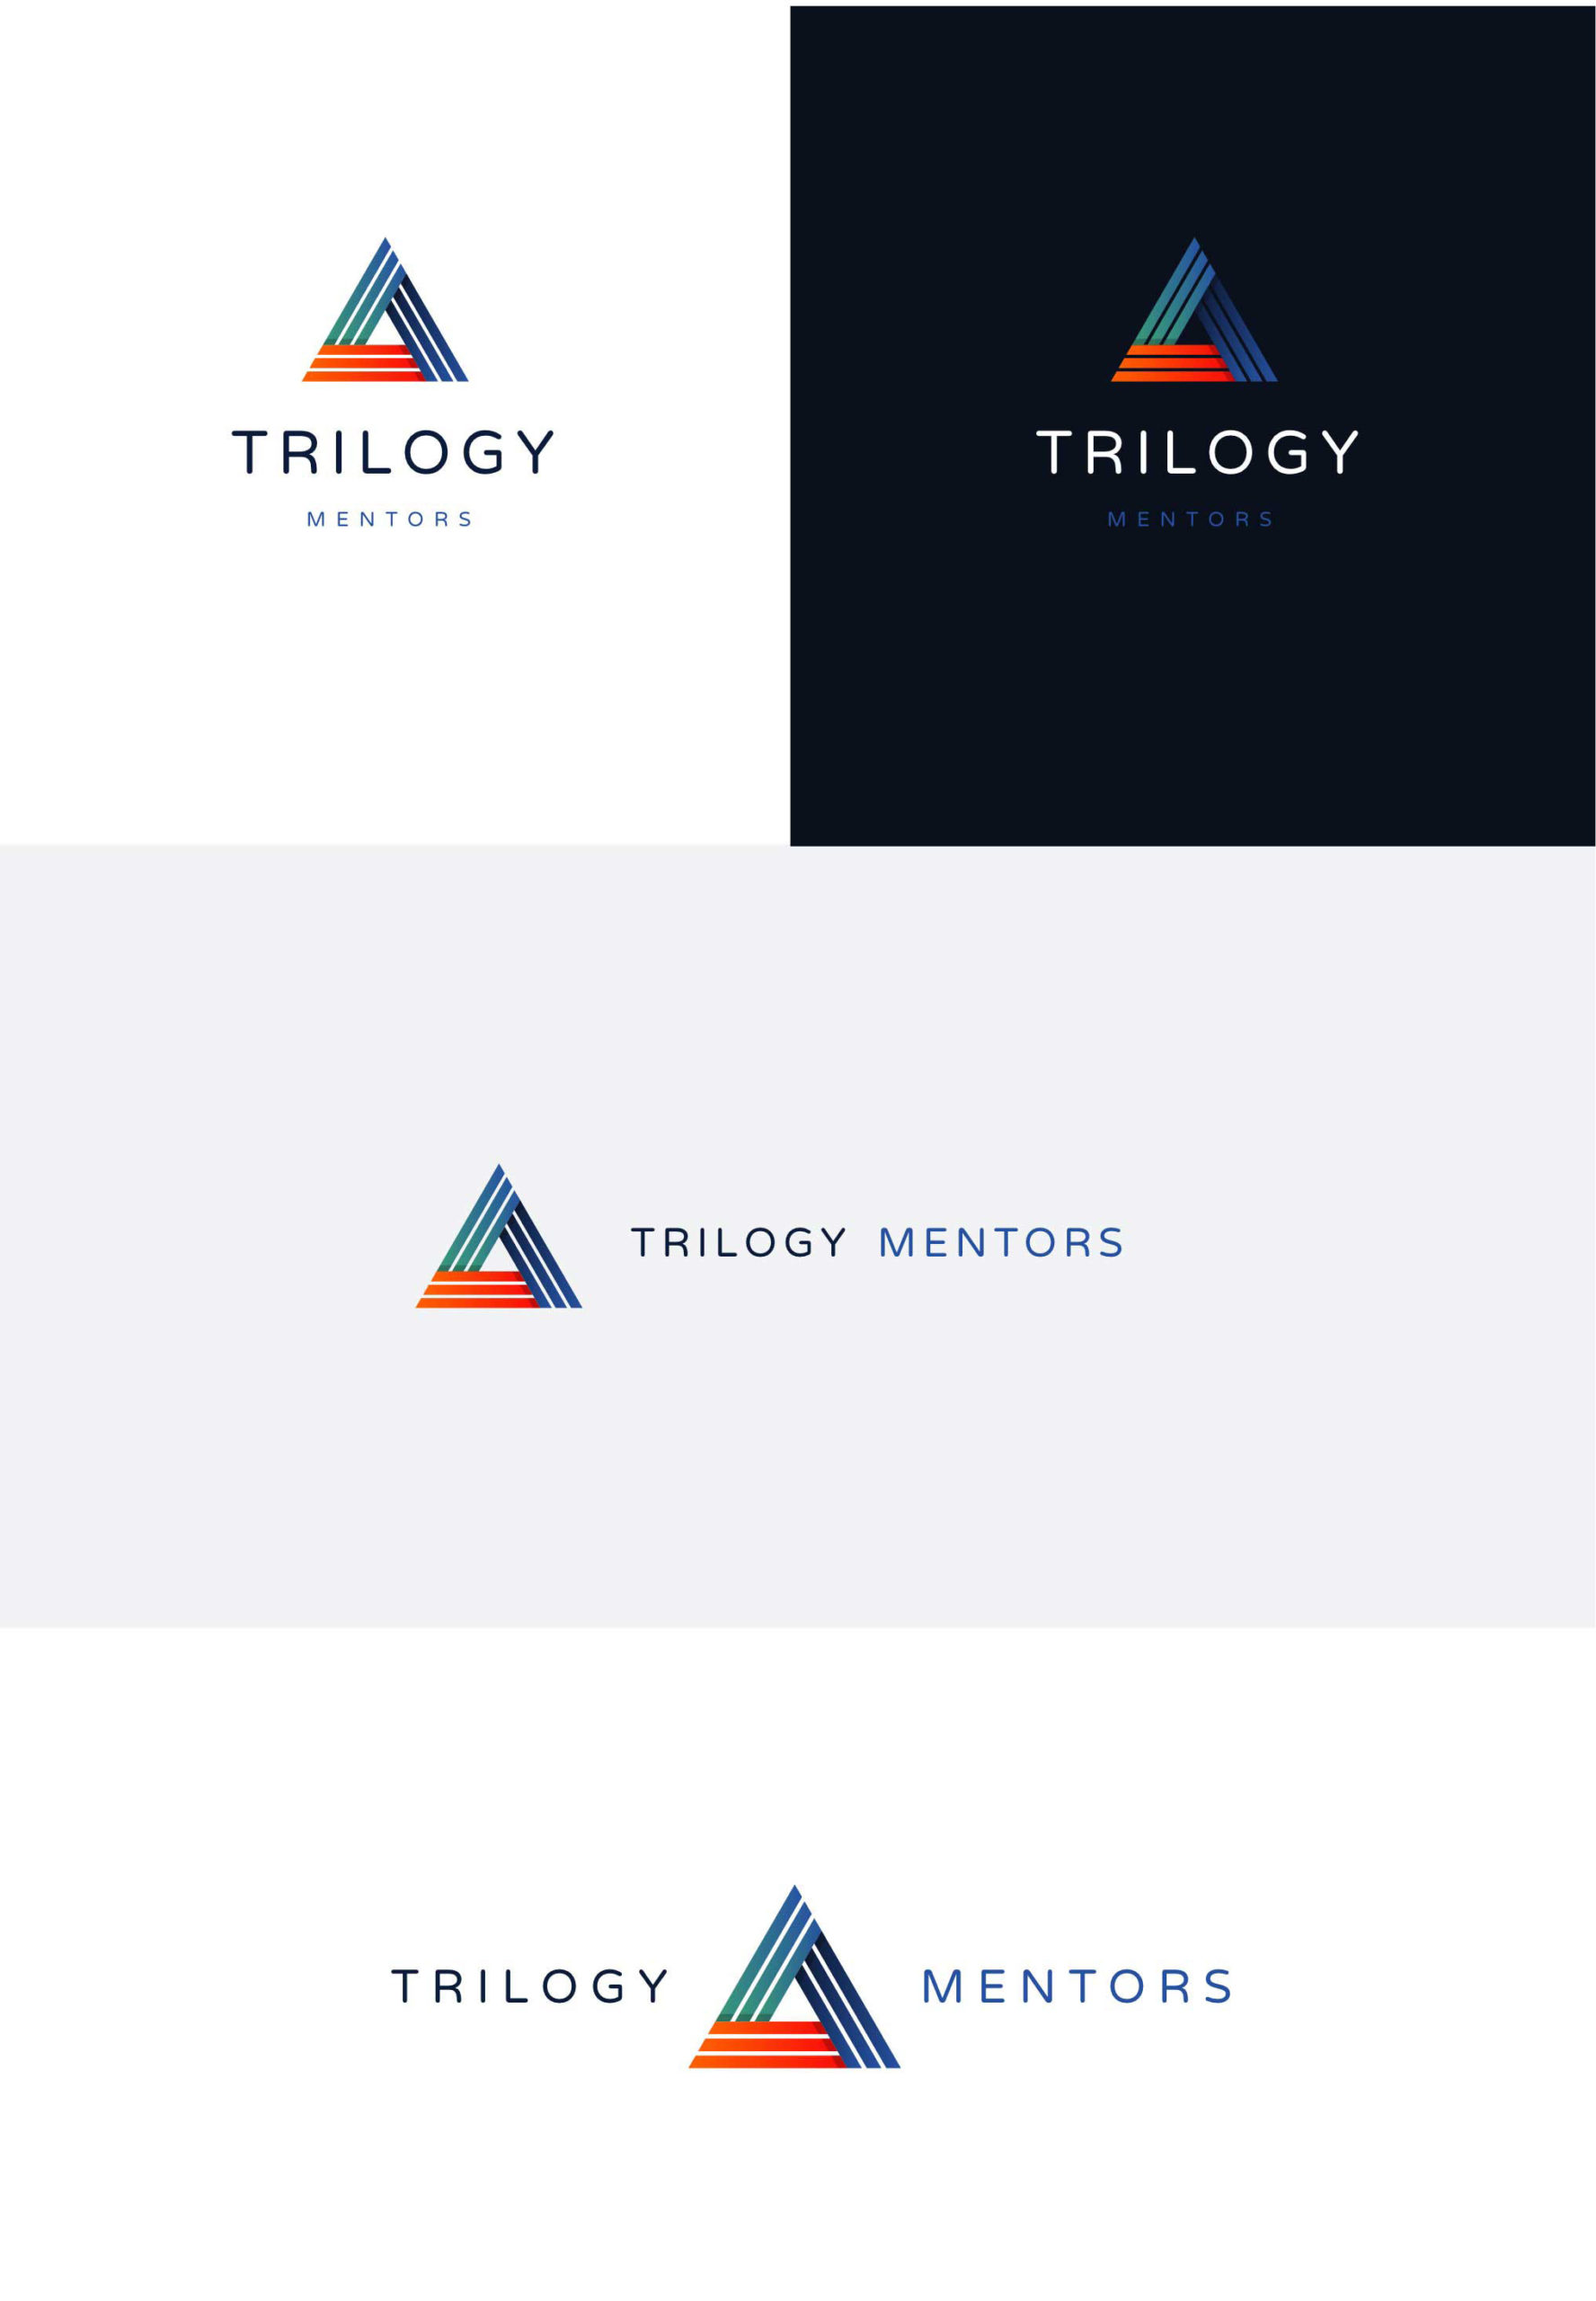 Trilogy Mentors logo concepts